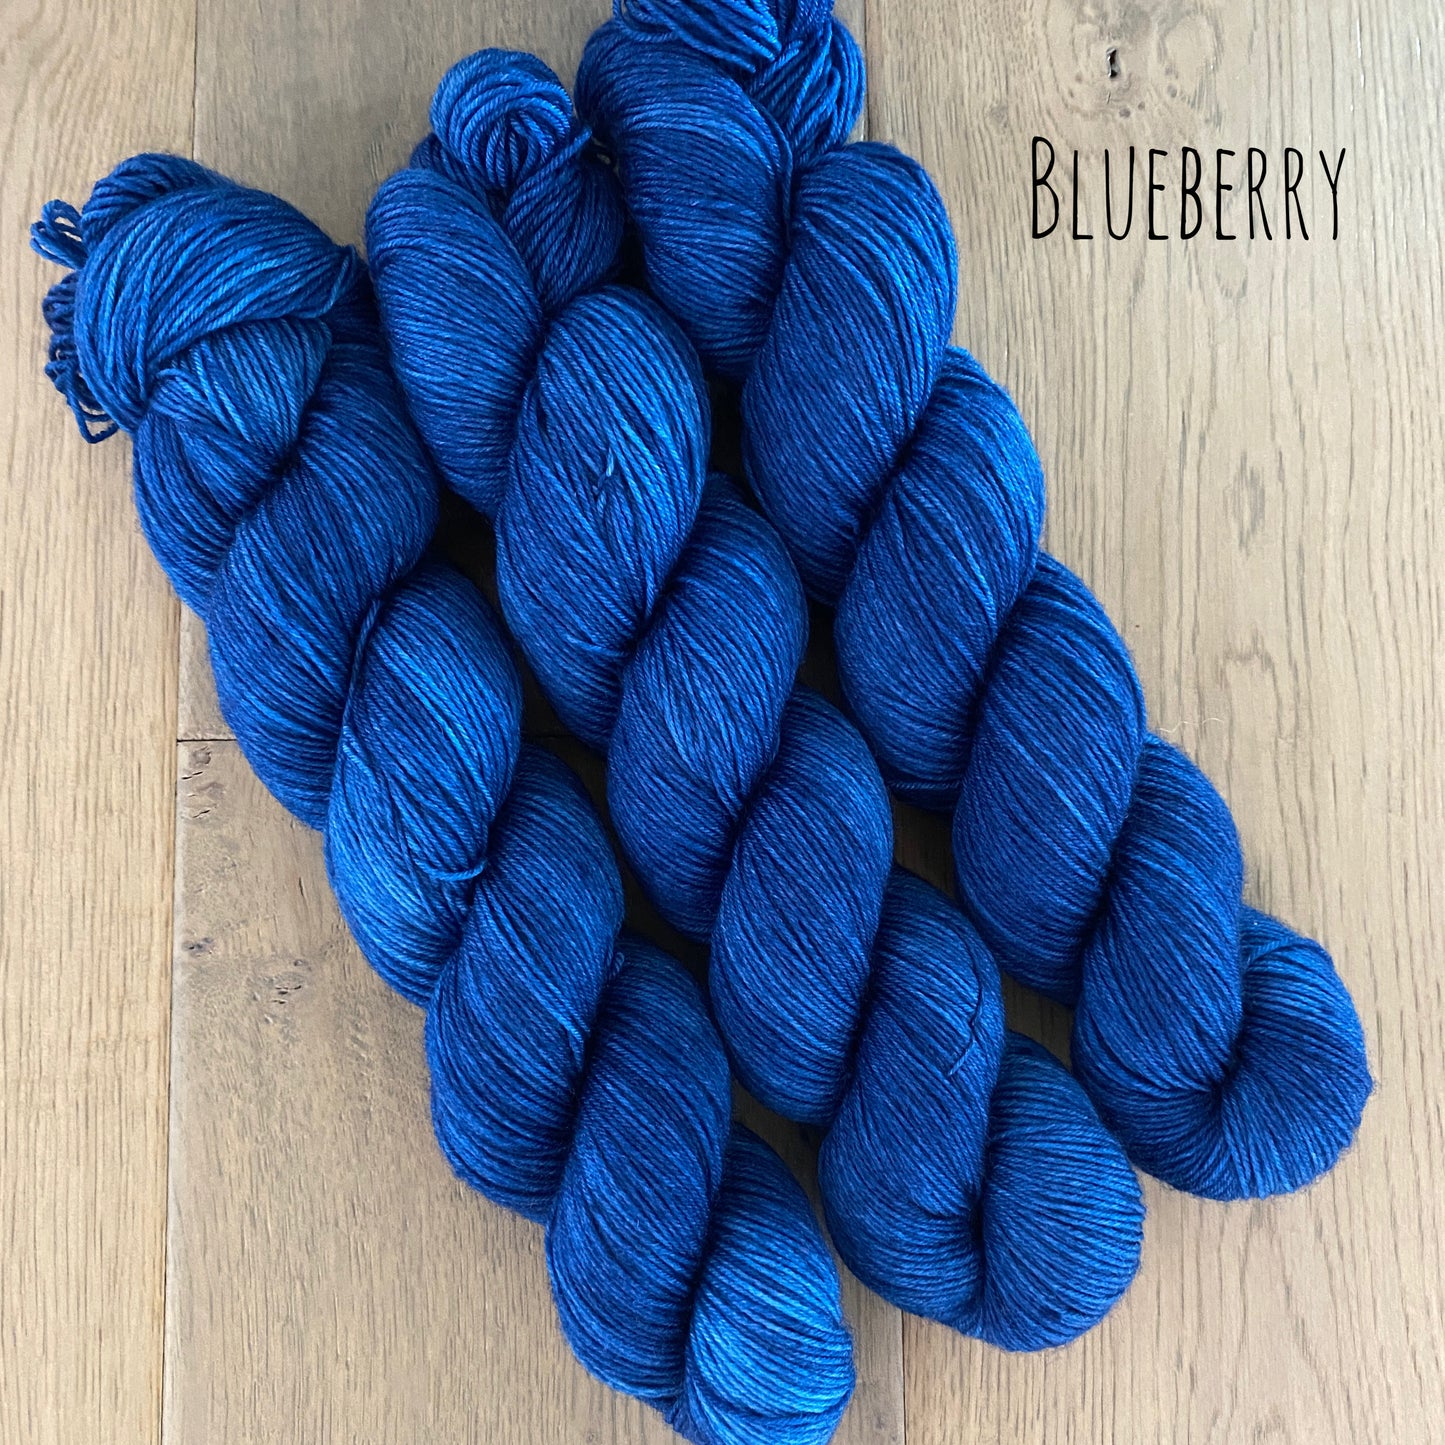 Blueberry Fingering Yarn